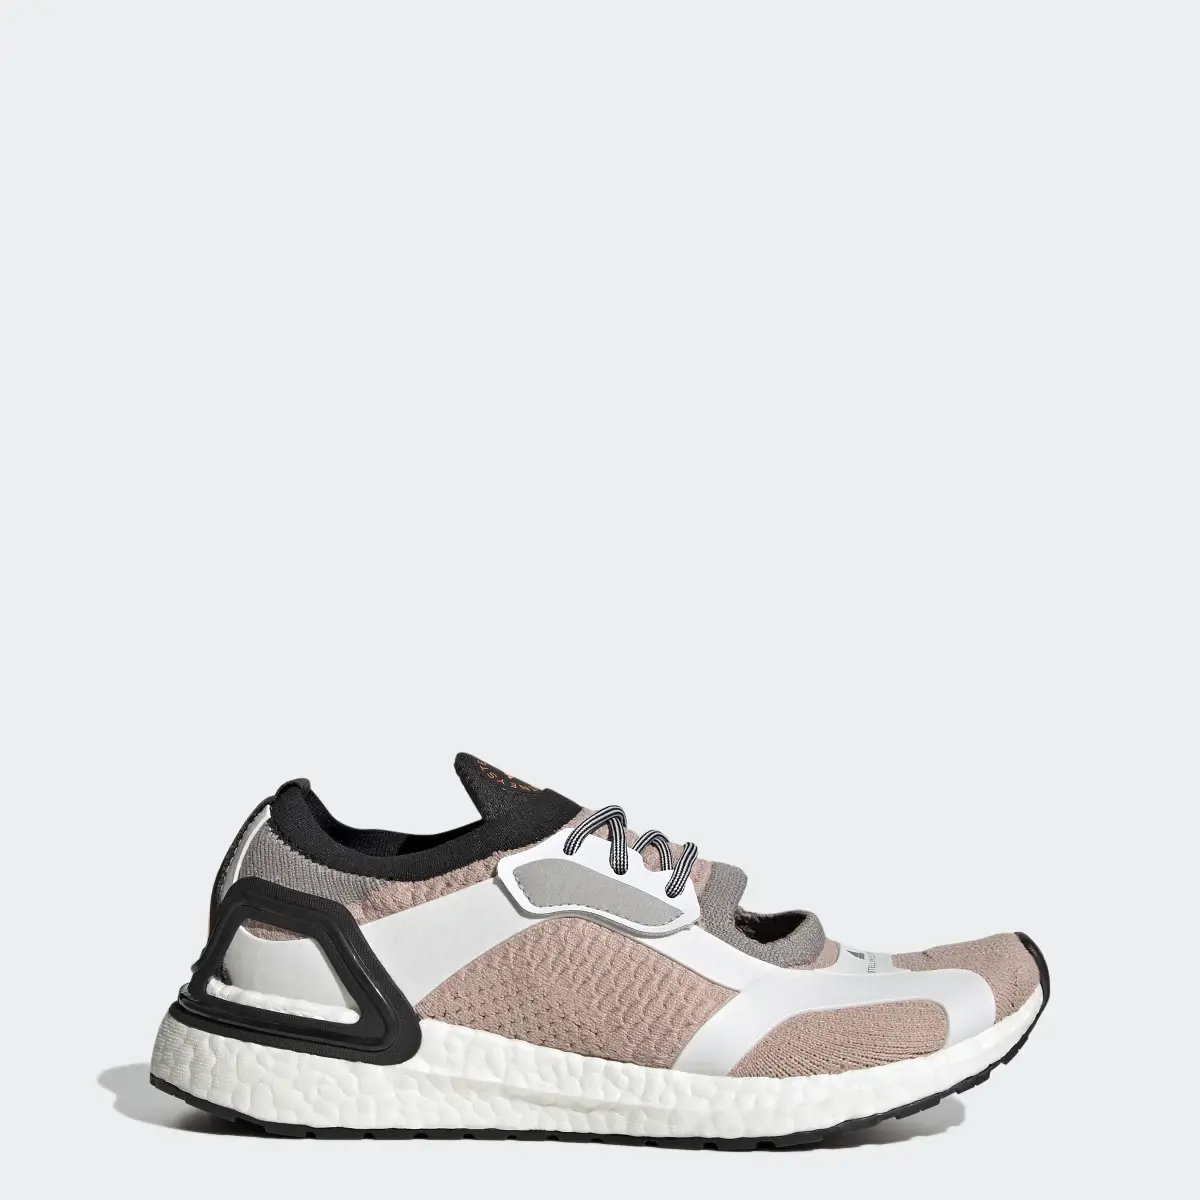 Adidas by Stella McCartney Ultraboost Sandal. 1